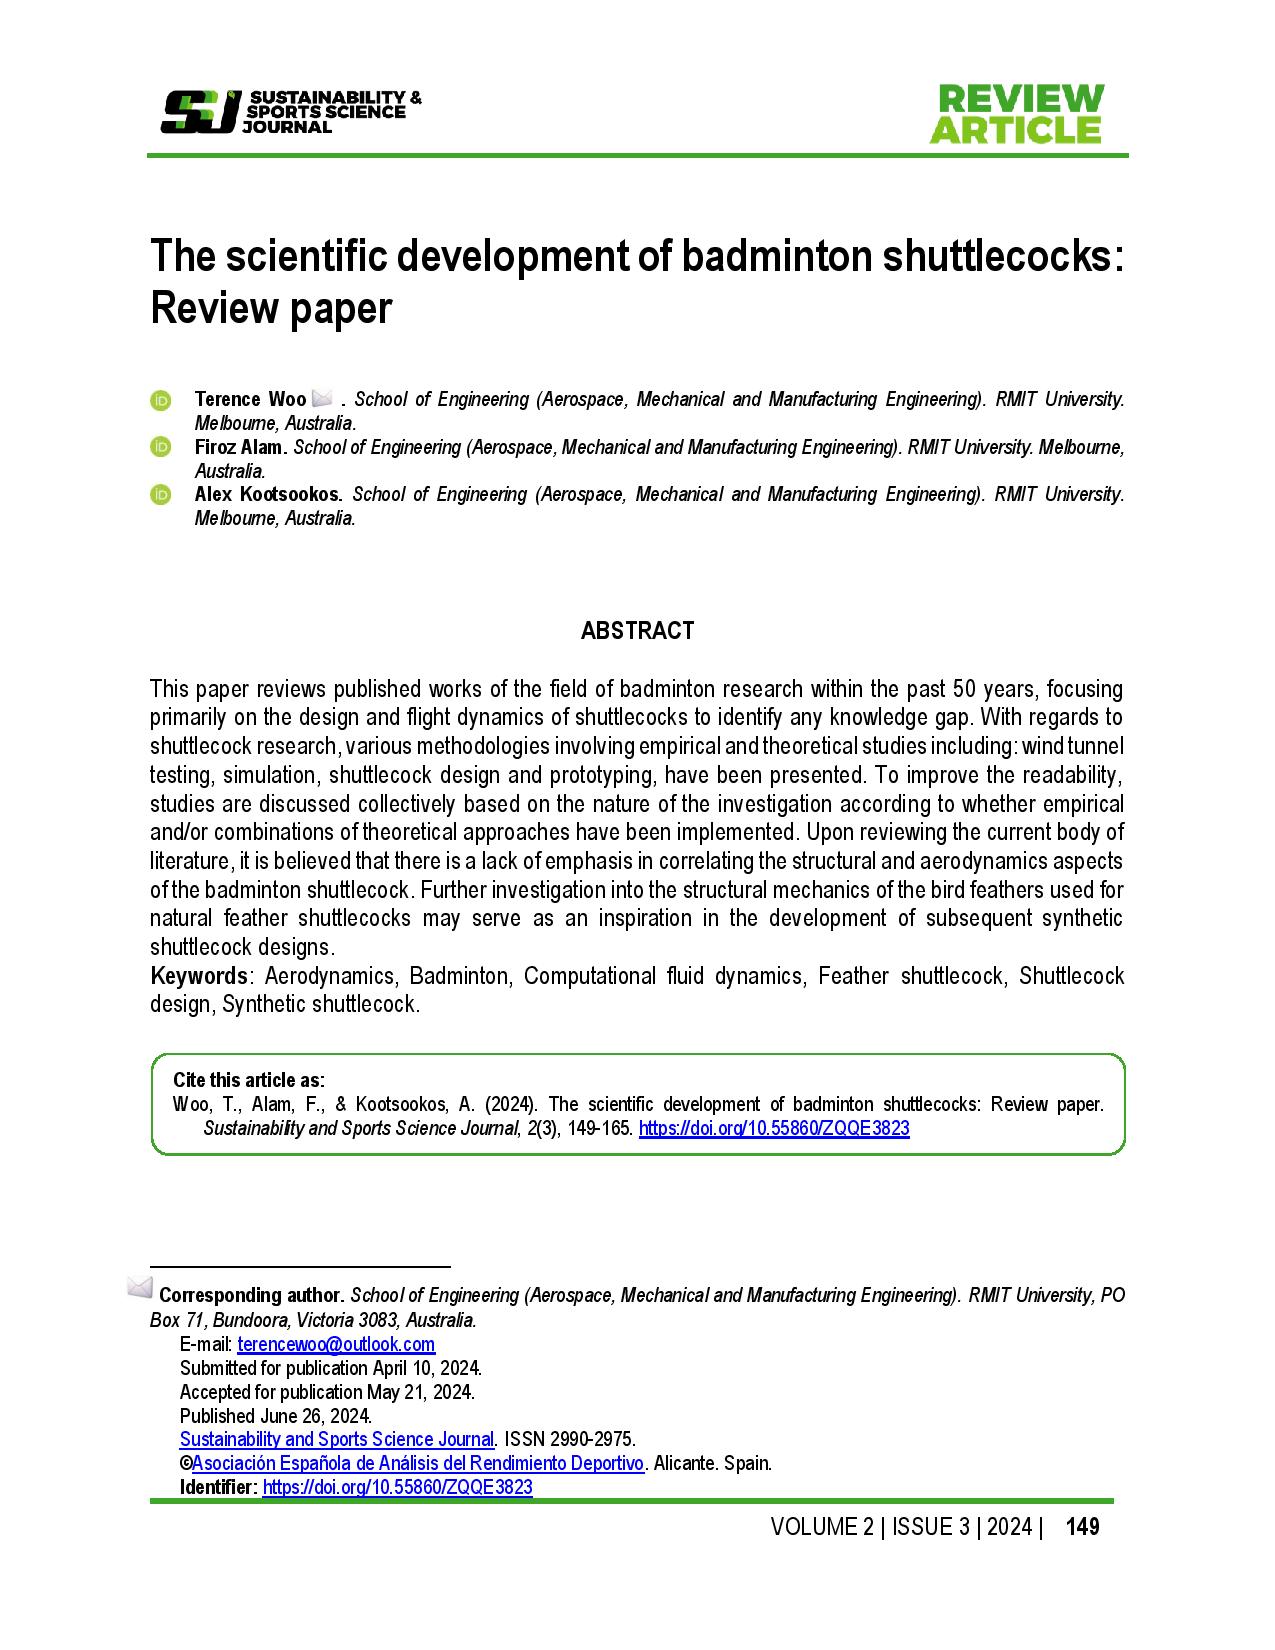 The scientific development of badminton shuttlecocks: Review paper